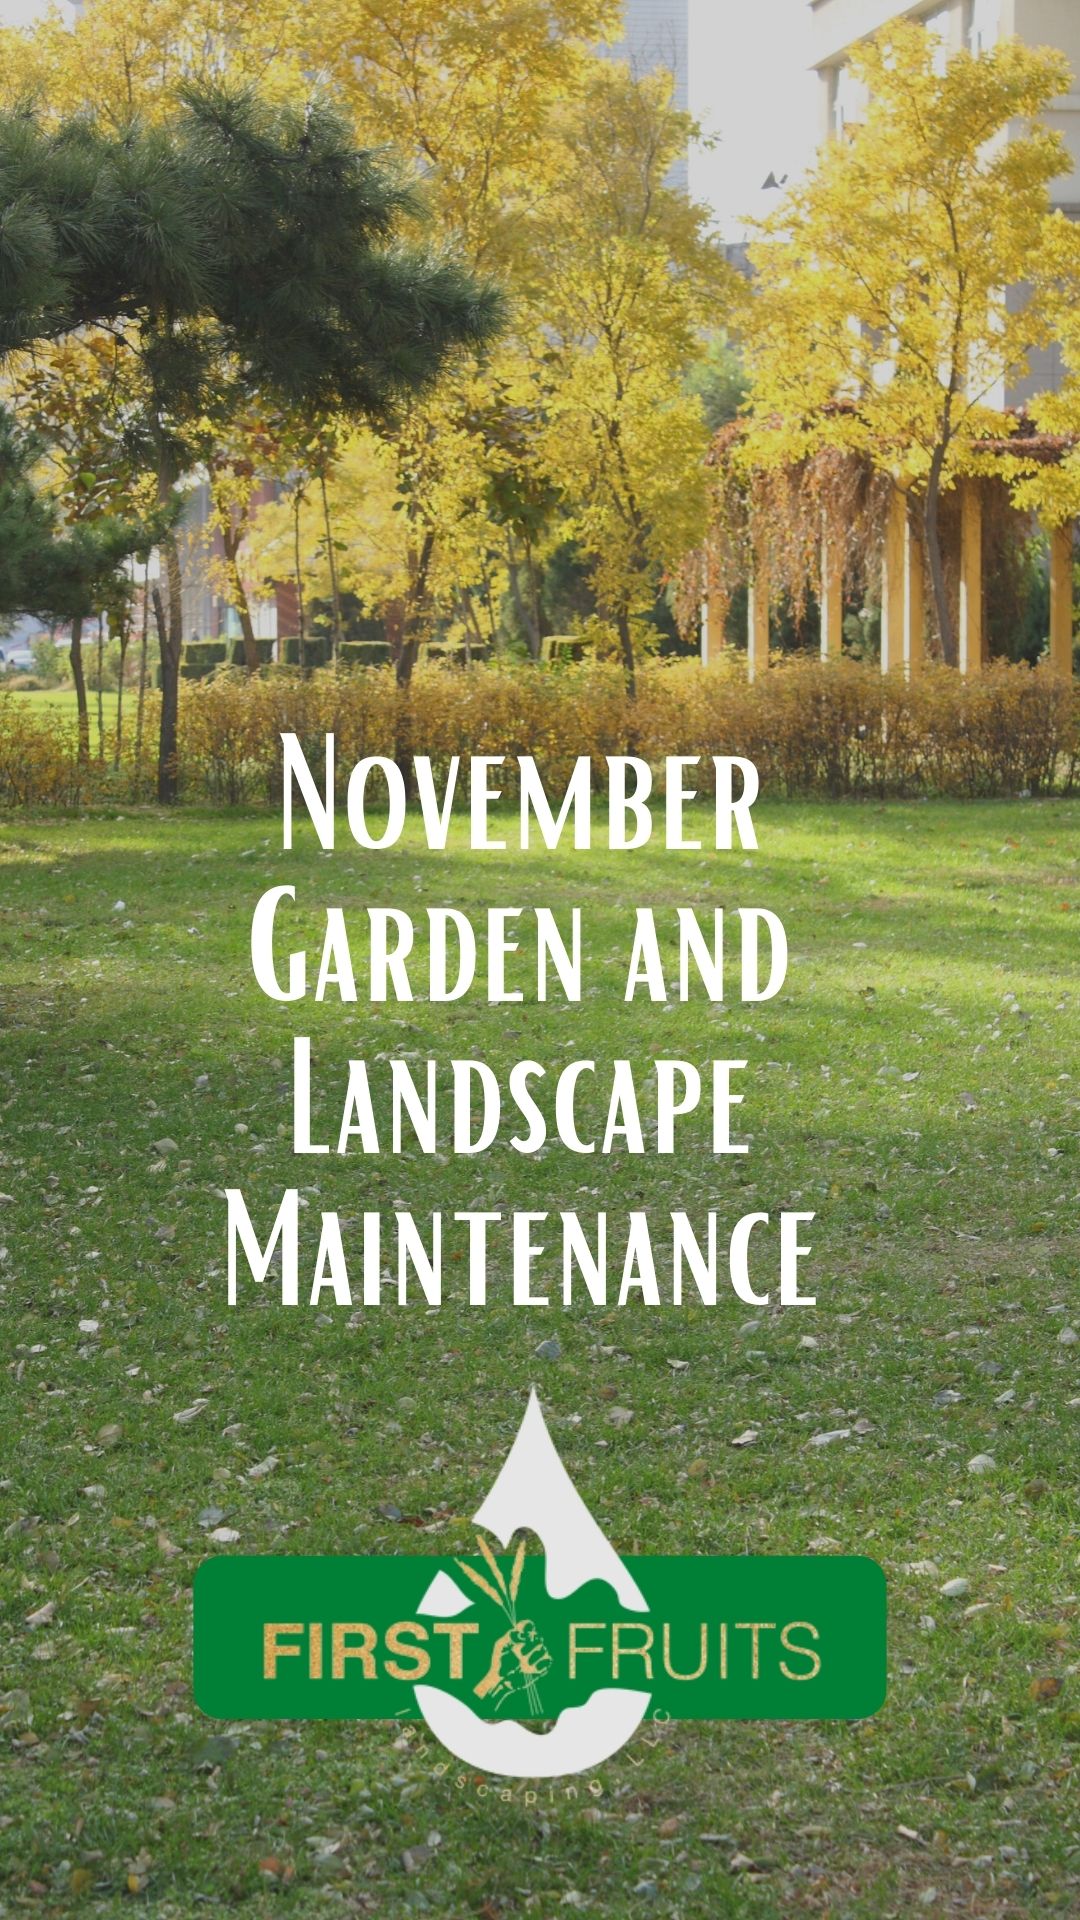 November Garden and Landscape Maintenance